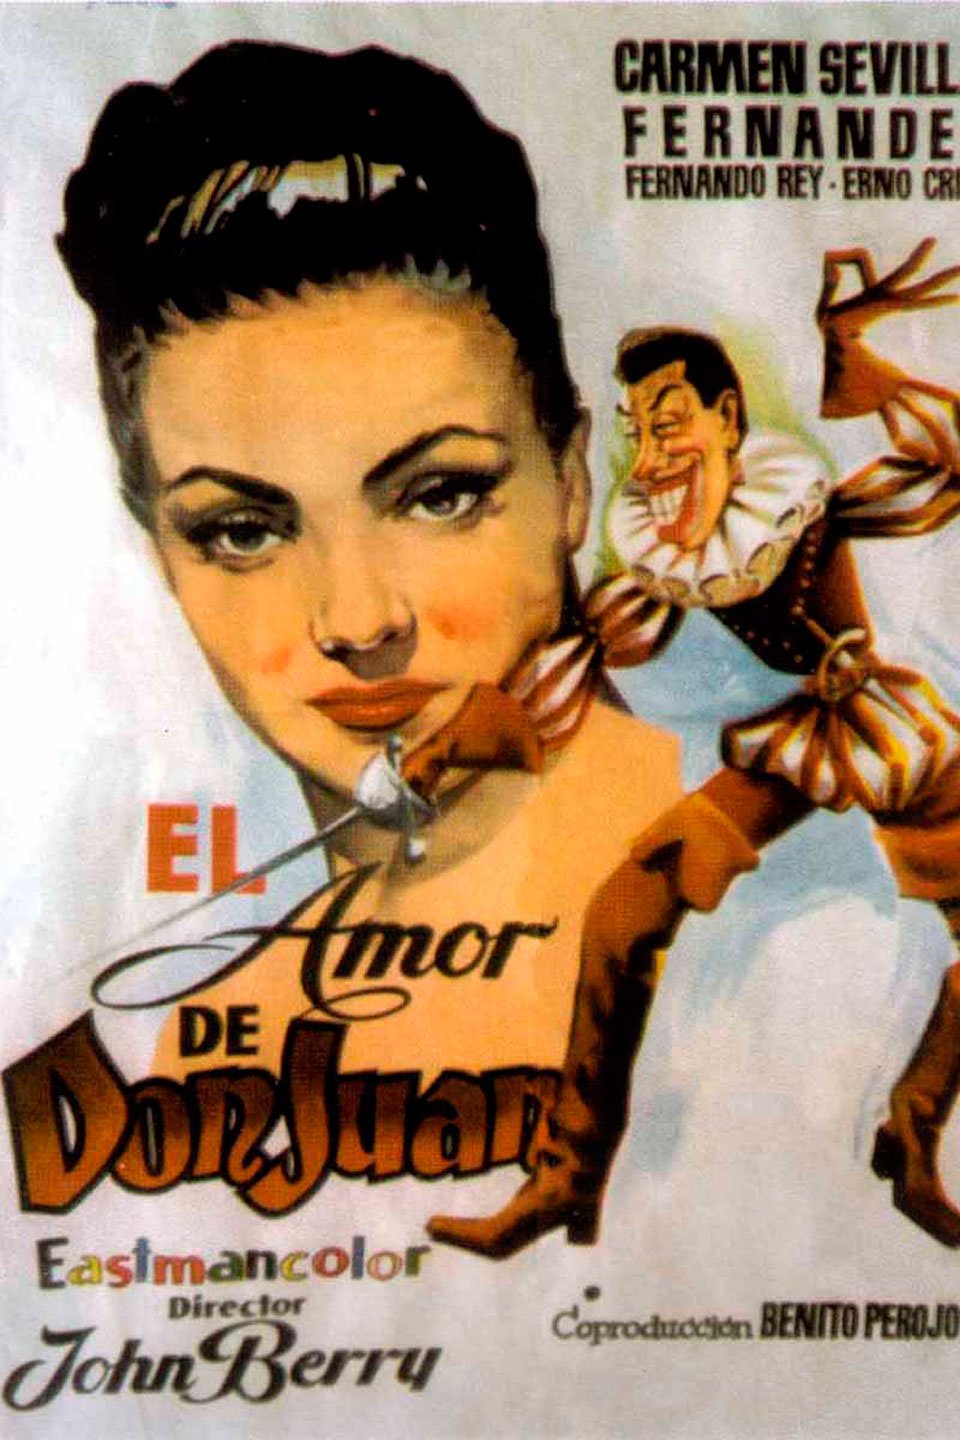 Don Juan : Affiche